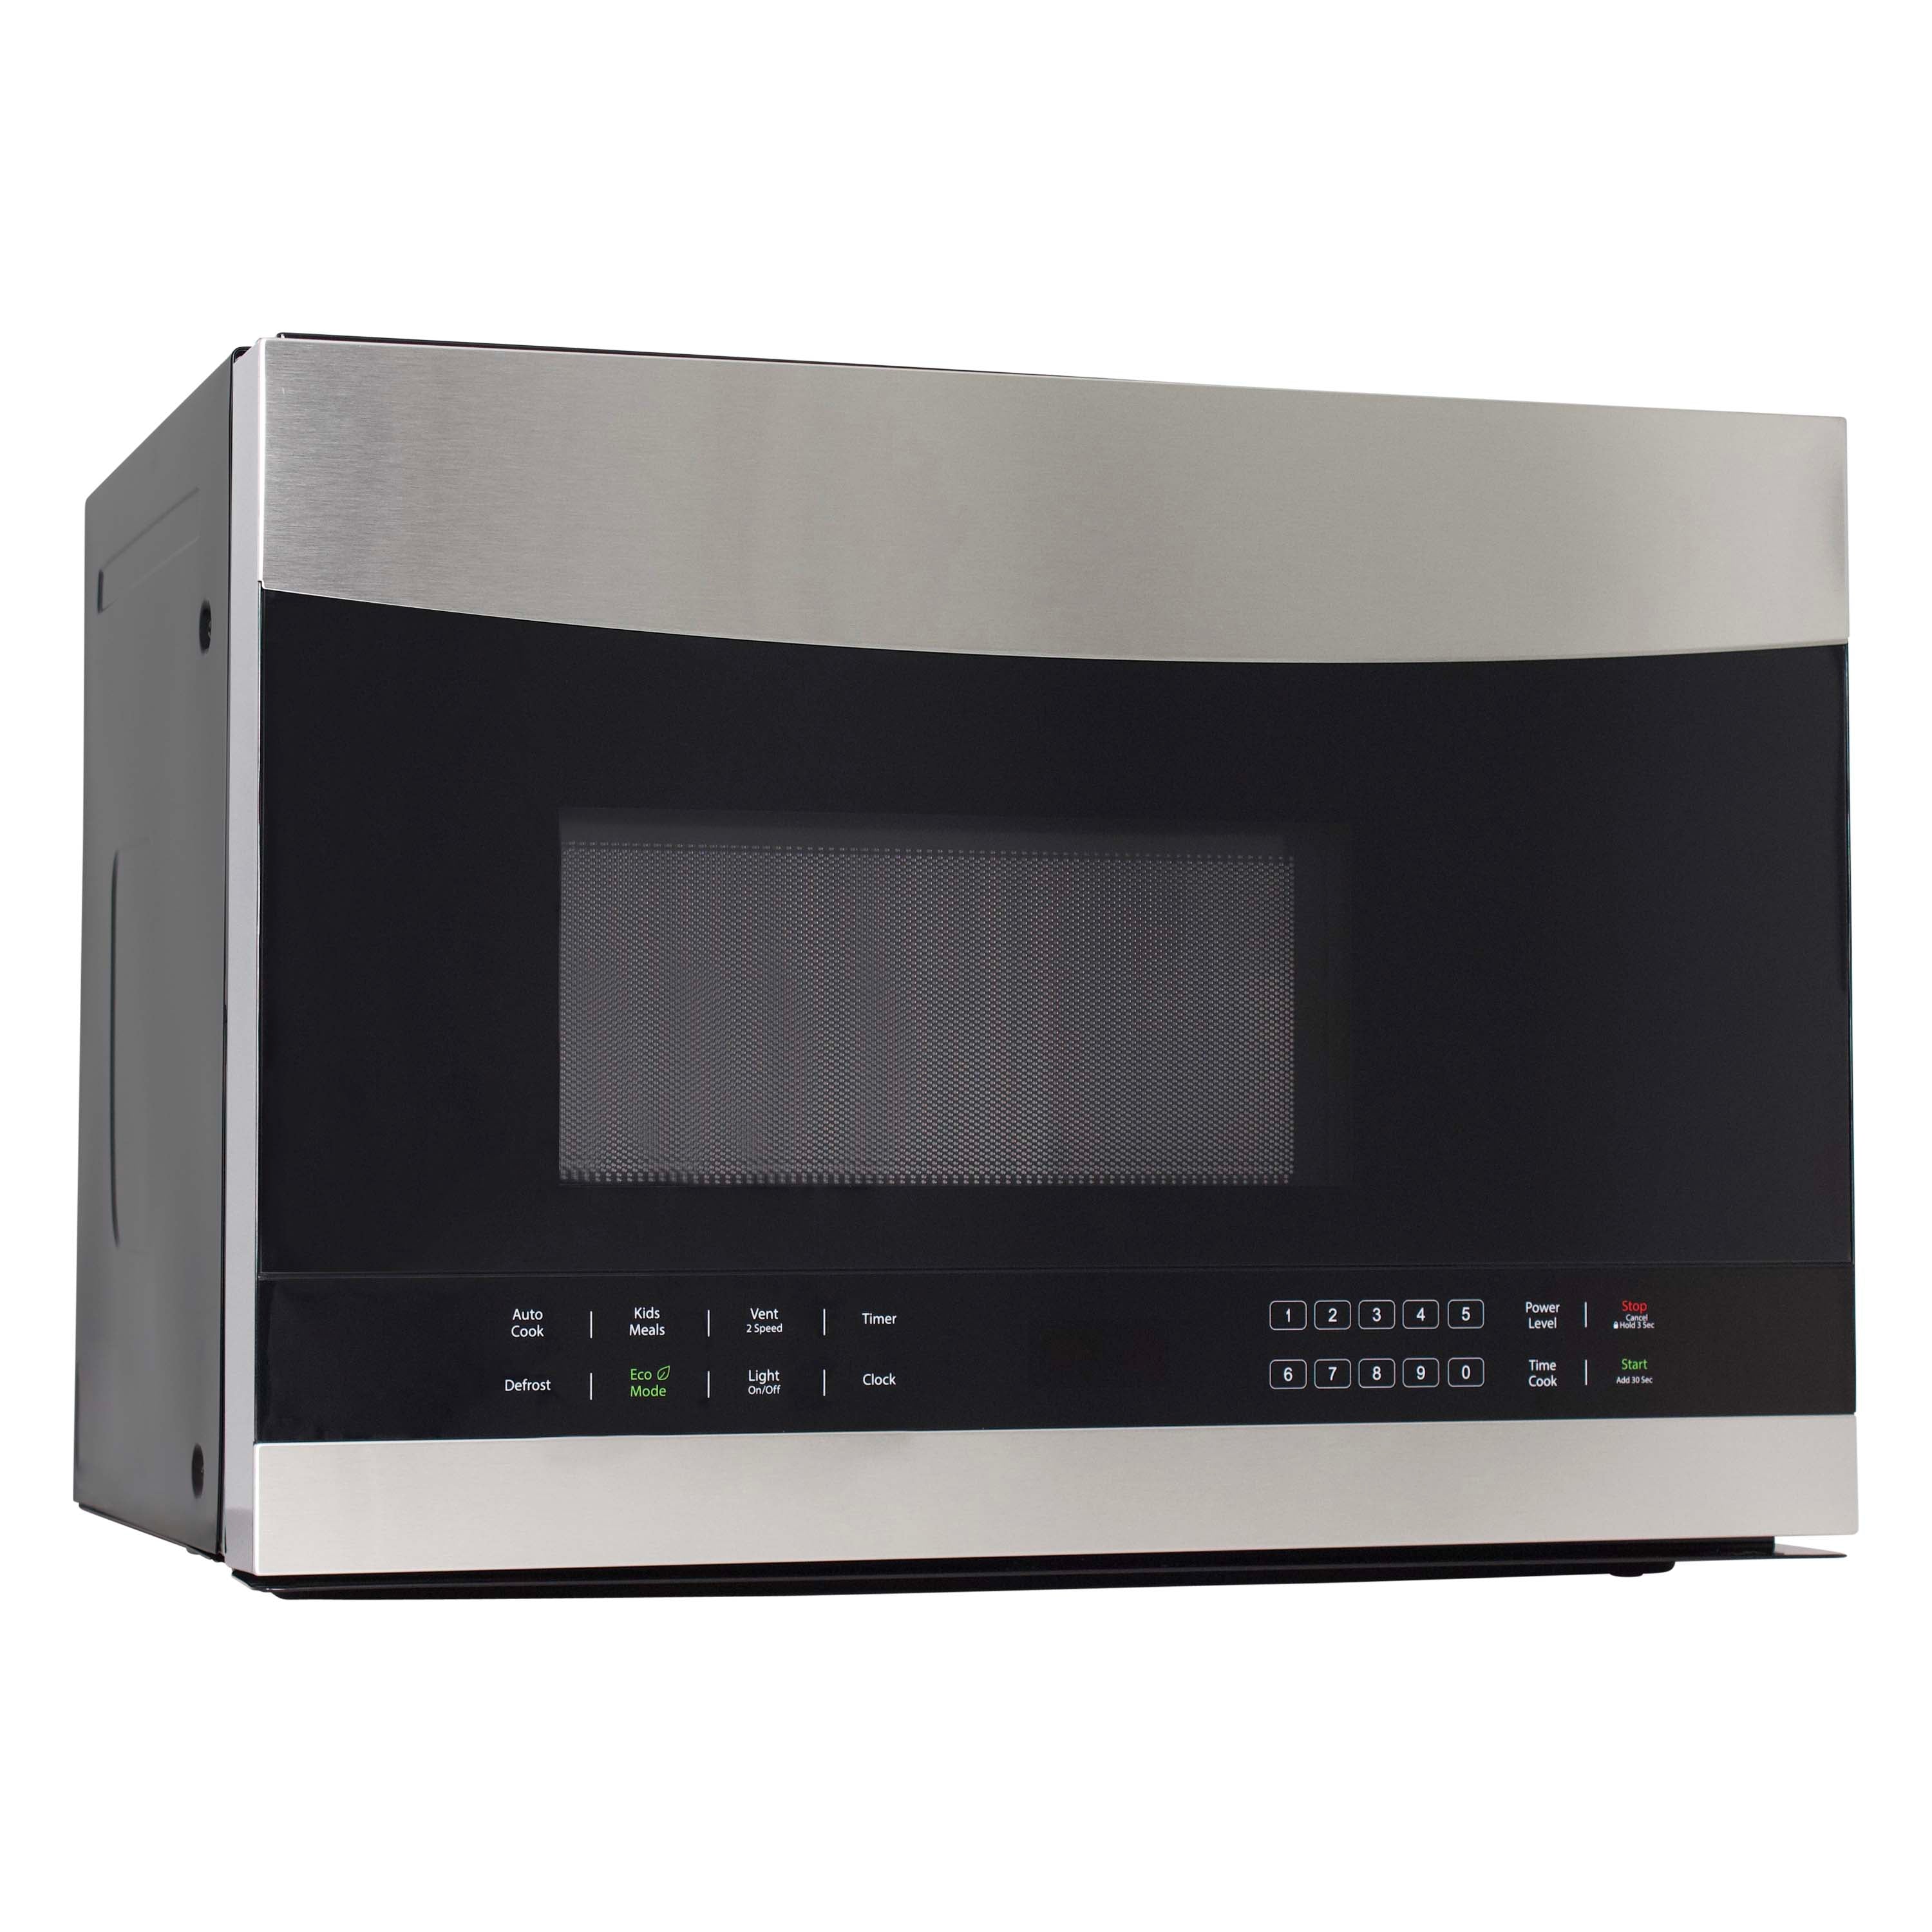 Avanti - MOTR14K3S-IS, Avanti Over-the-Range Microwave Oven, 1.4 cu. ft. Capacity, in Stainless Steel